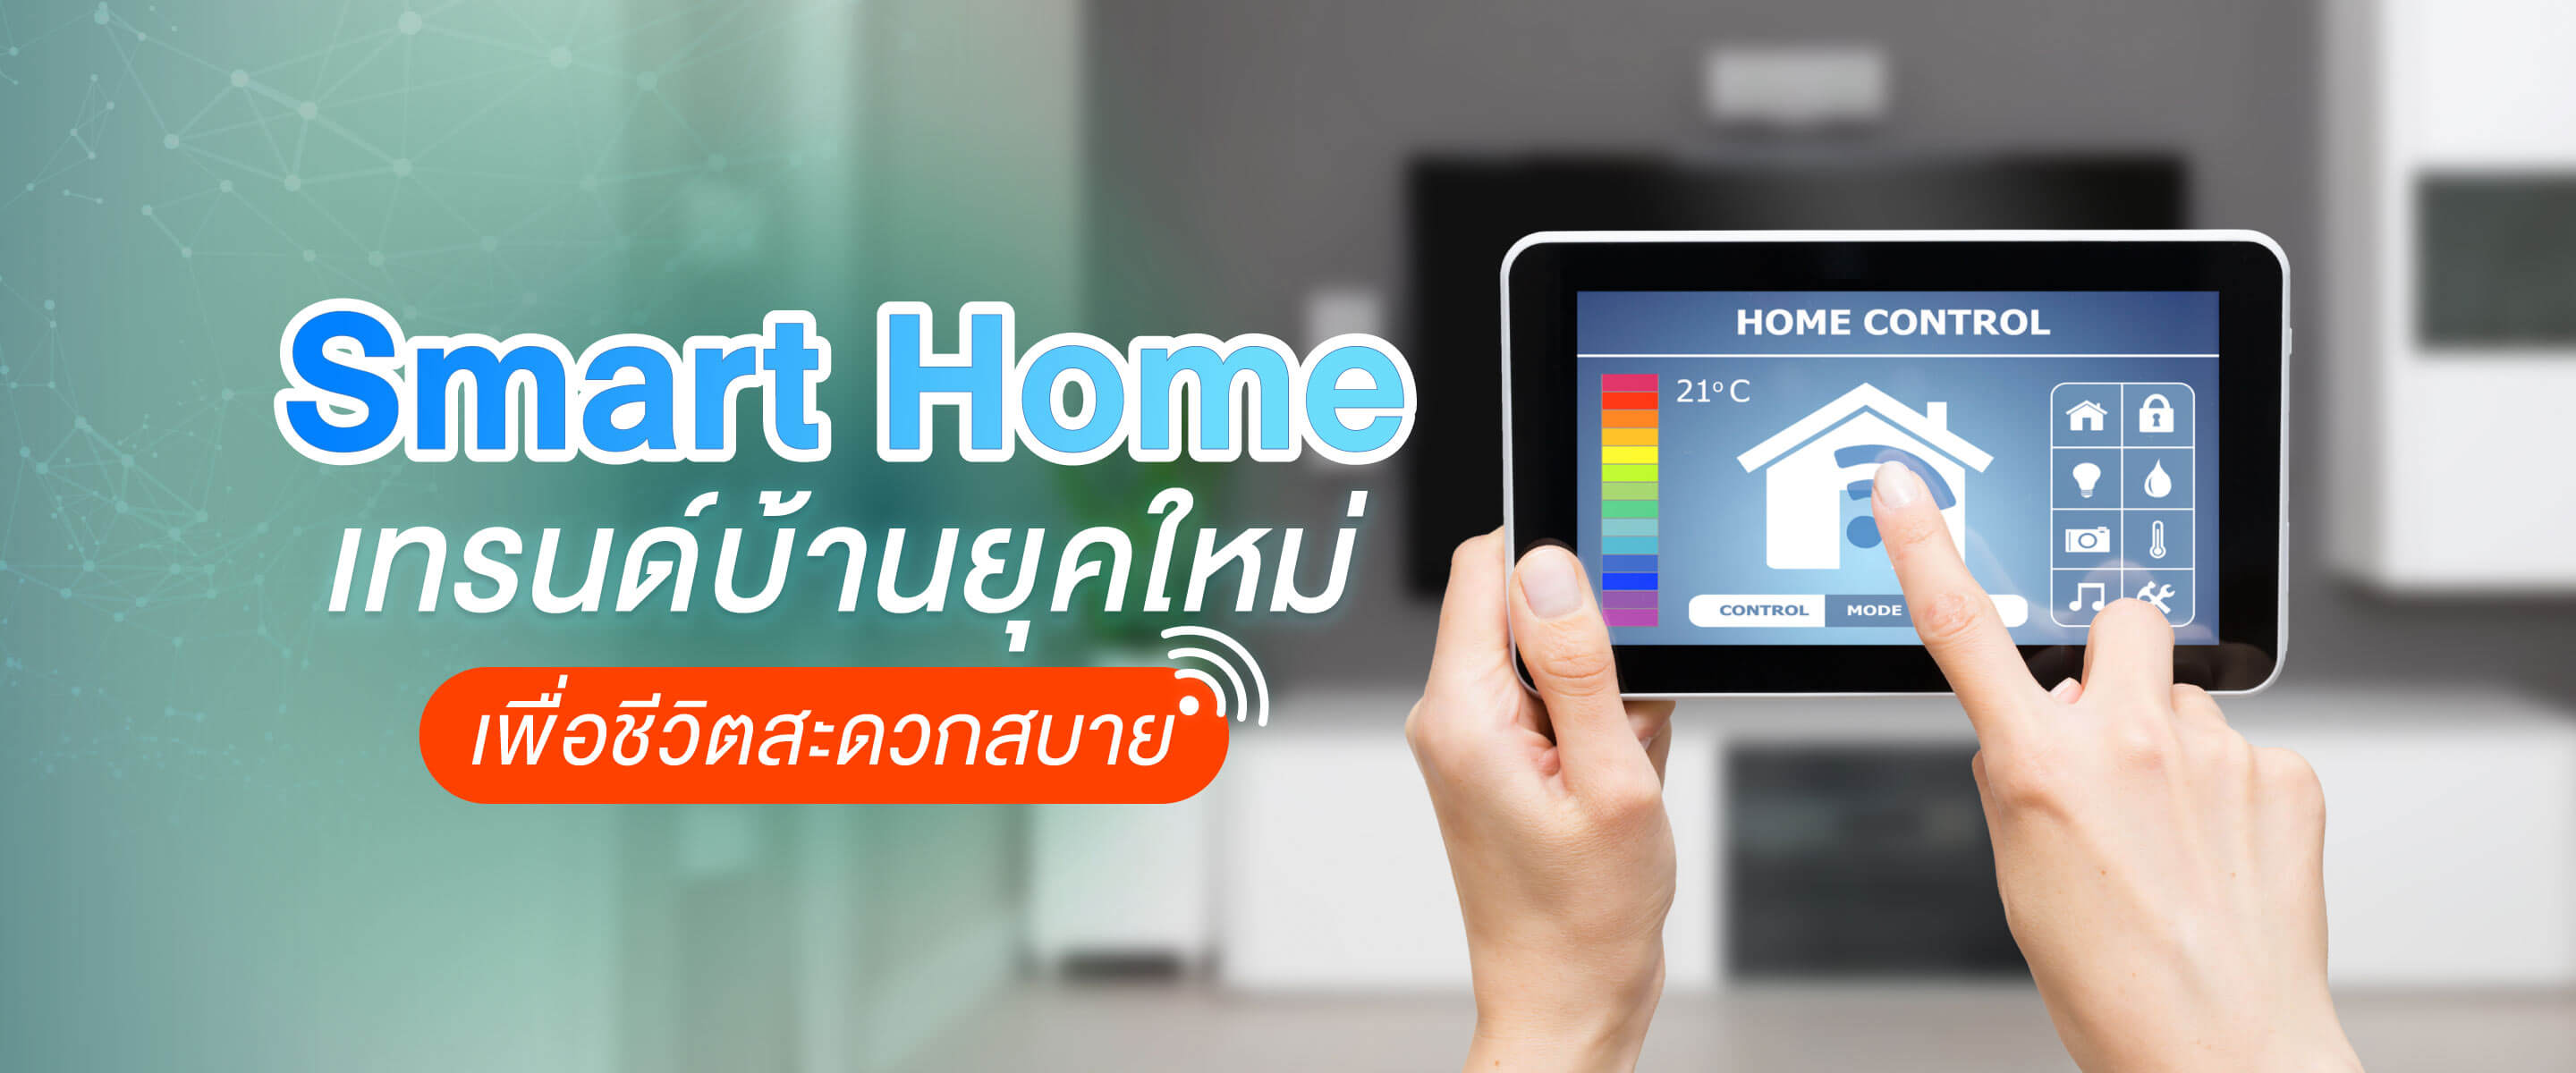 Smart Home เทรนด์บ้านยุคใหม่ เพื่อชีวิตสะดวกสบาย